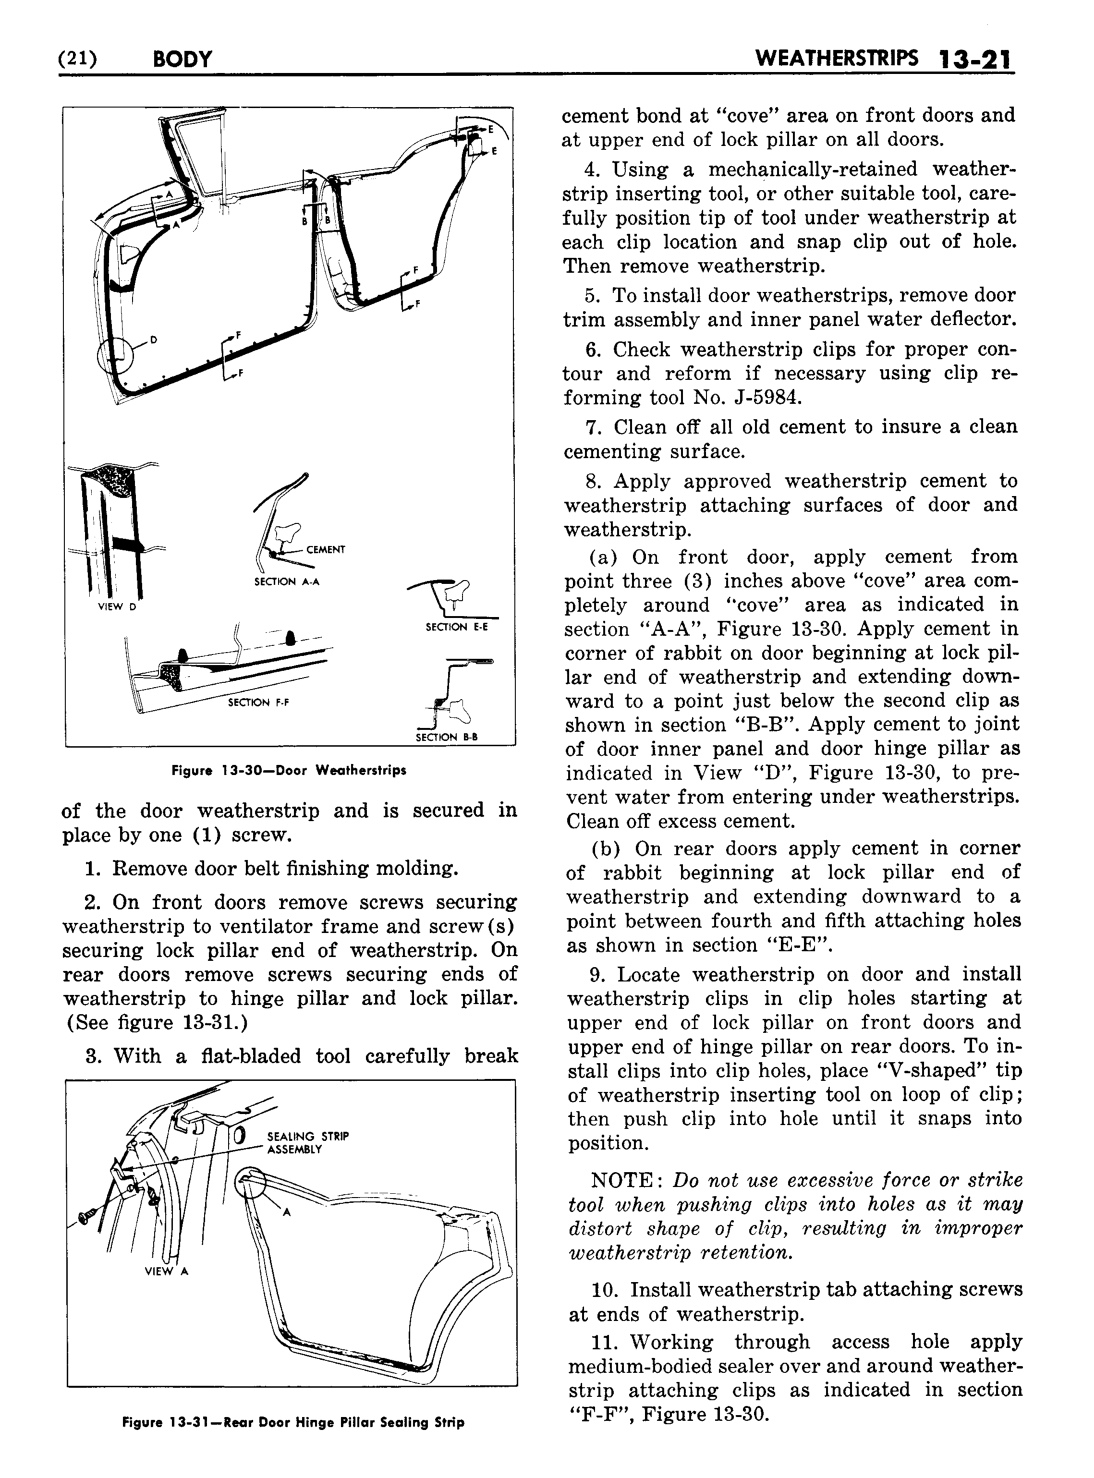 n_1957 Buick Body Service Manual-023-023.jpg